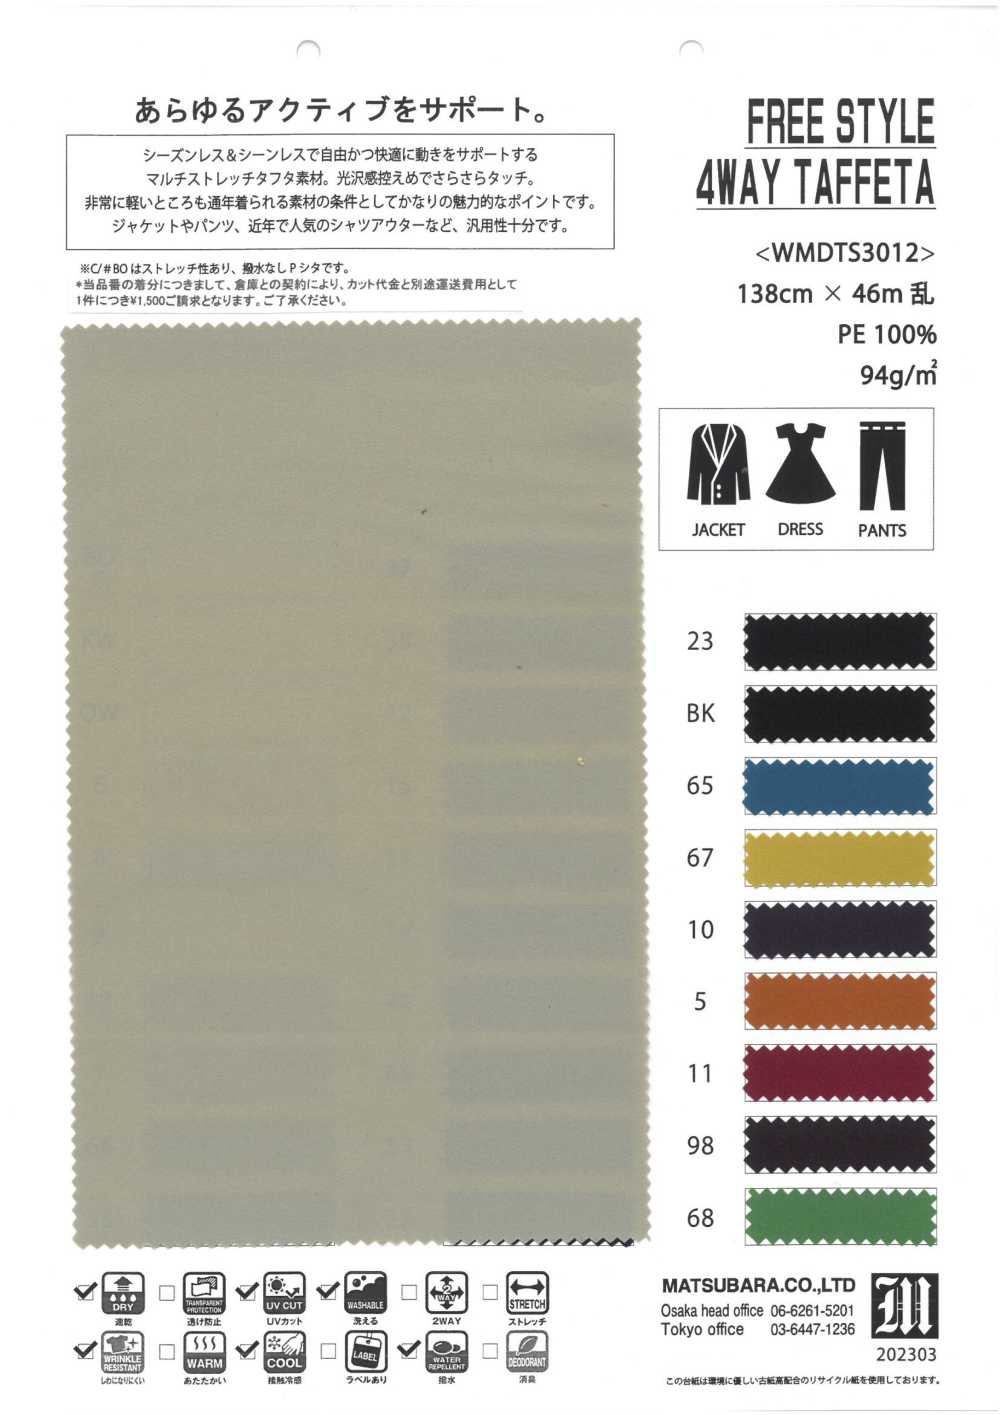 WMDTS3012 FREE STYLE AWAY TAFFETA[Textile / Fabric] Matsubara